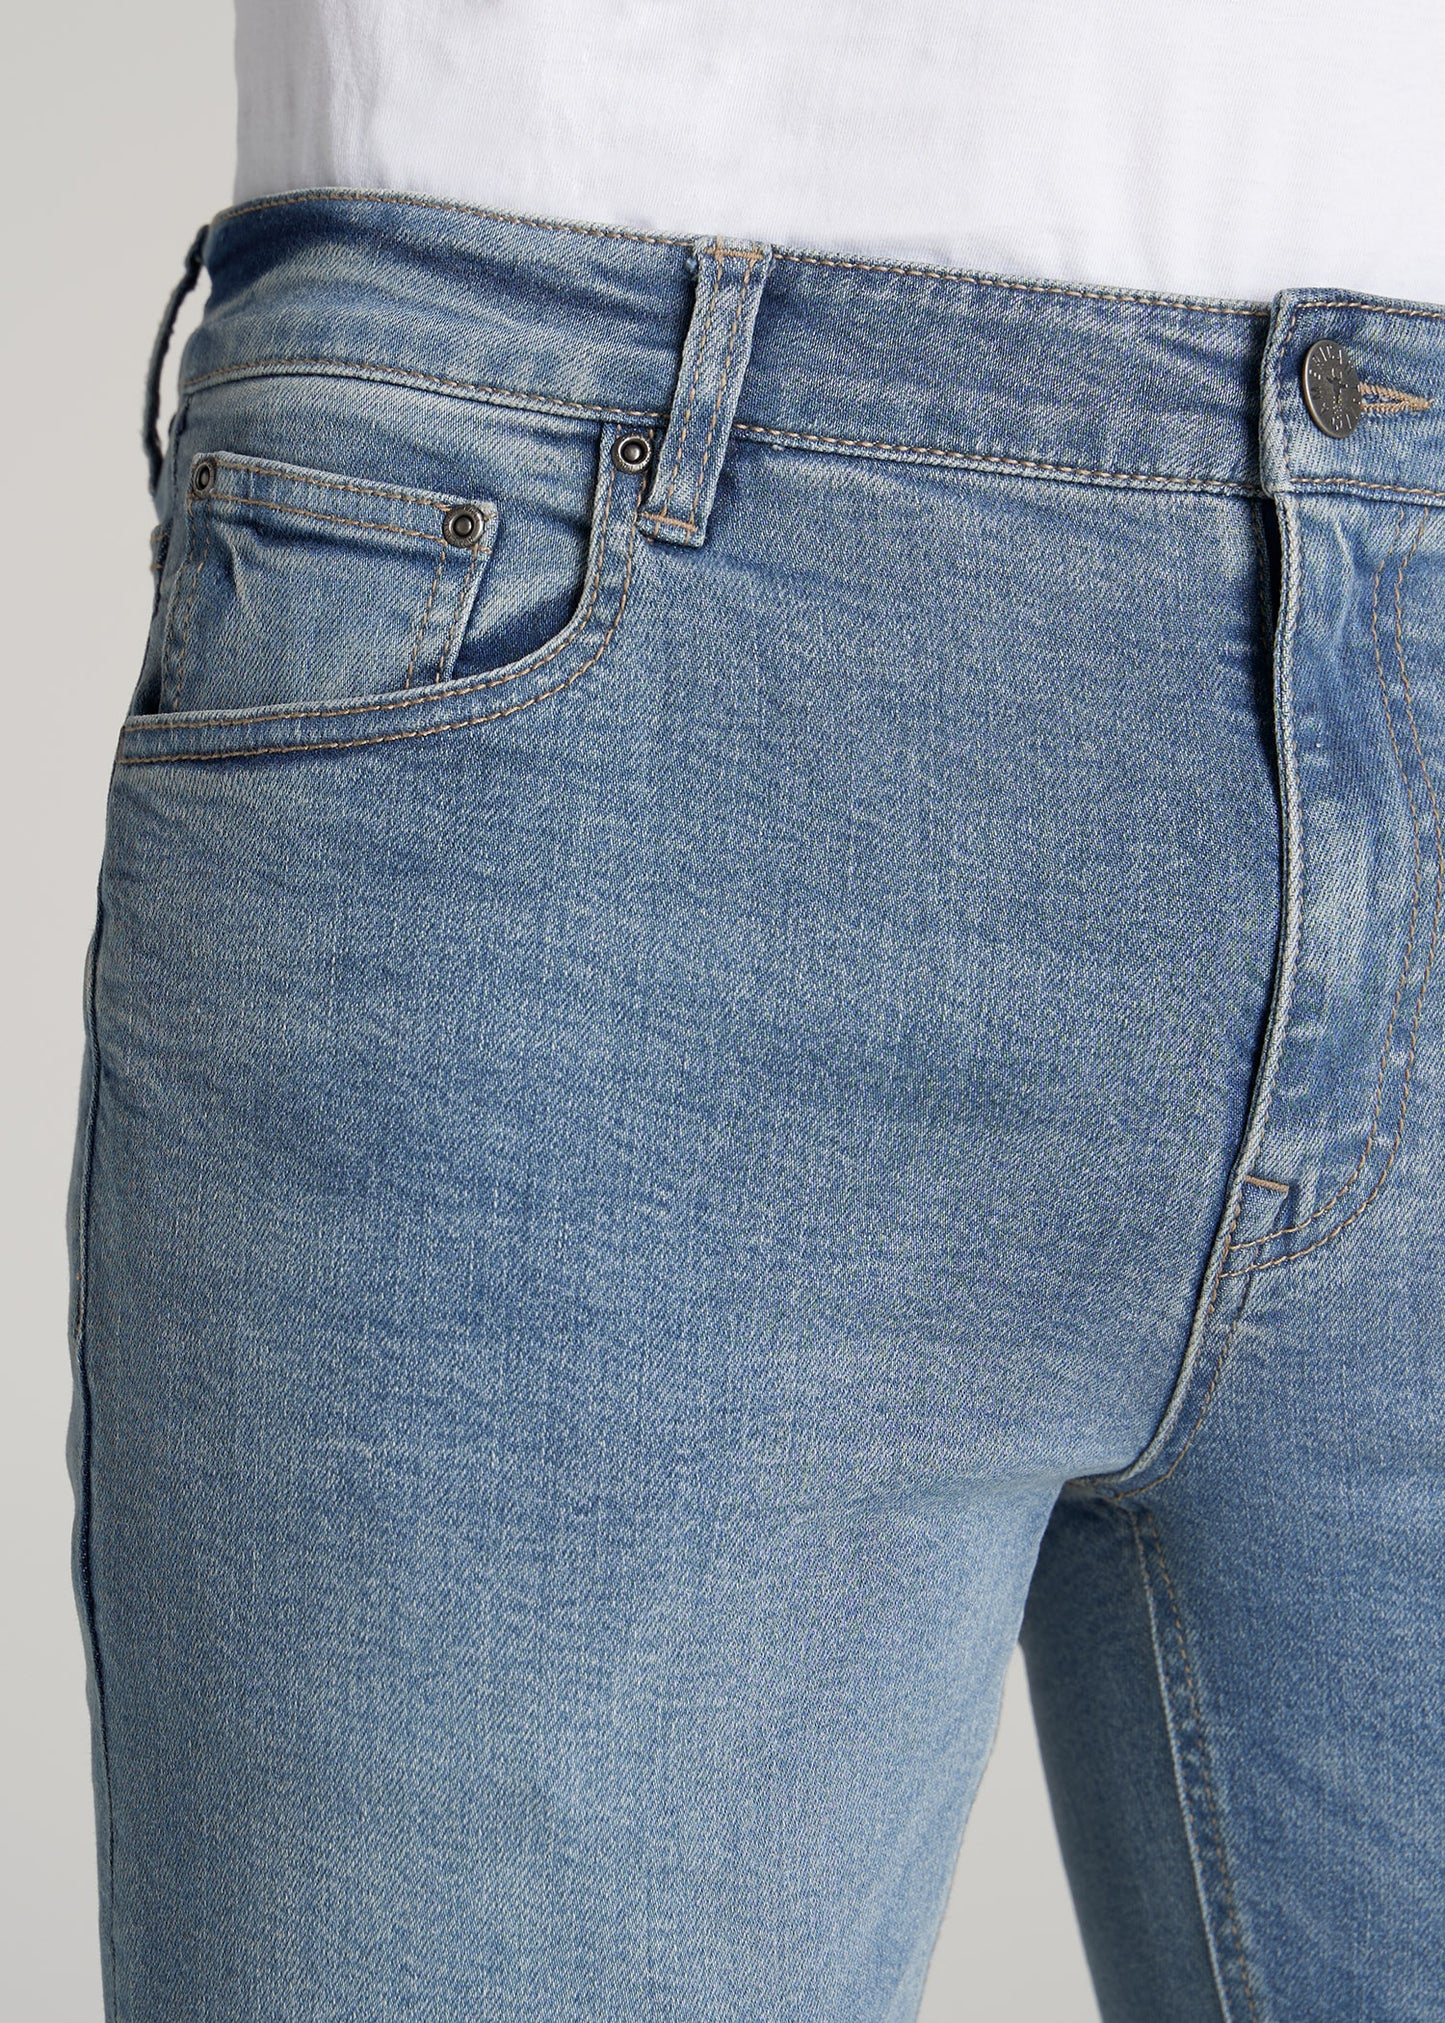     American-Tall-Men-Travis-Skinny-Jeans-New-Fade-pocket